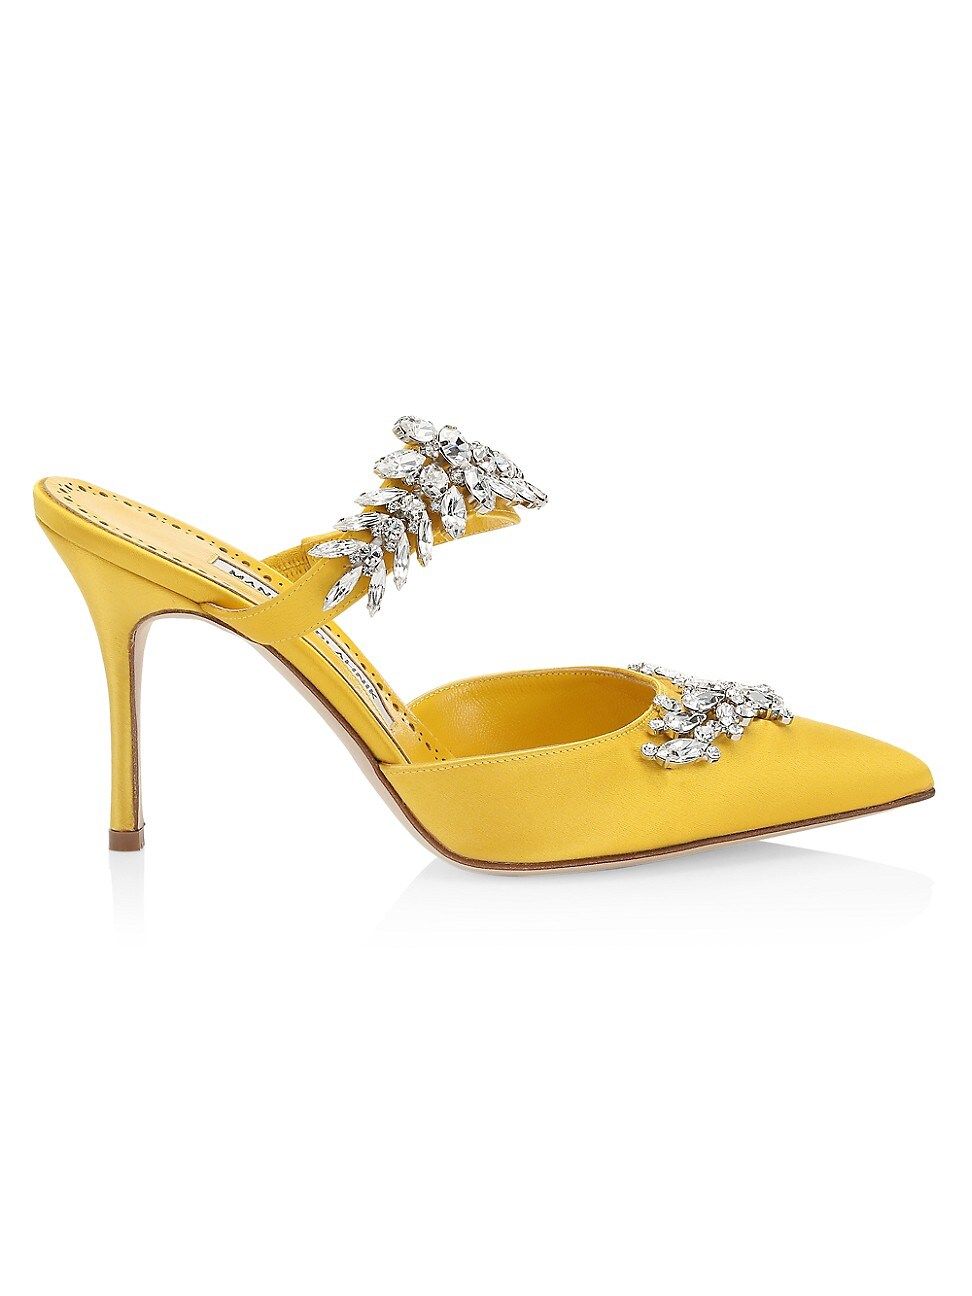 Manolo Blahnik Women's Lurum Embellished Satin Mules - Bright Yellow - Size 8 | Saks Fifth Avenue